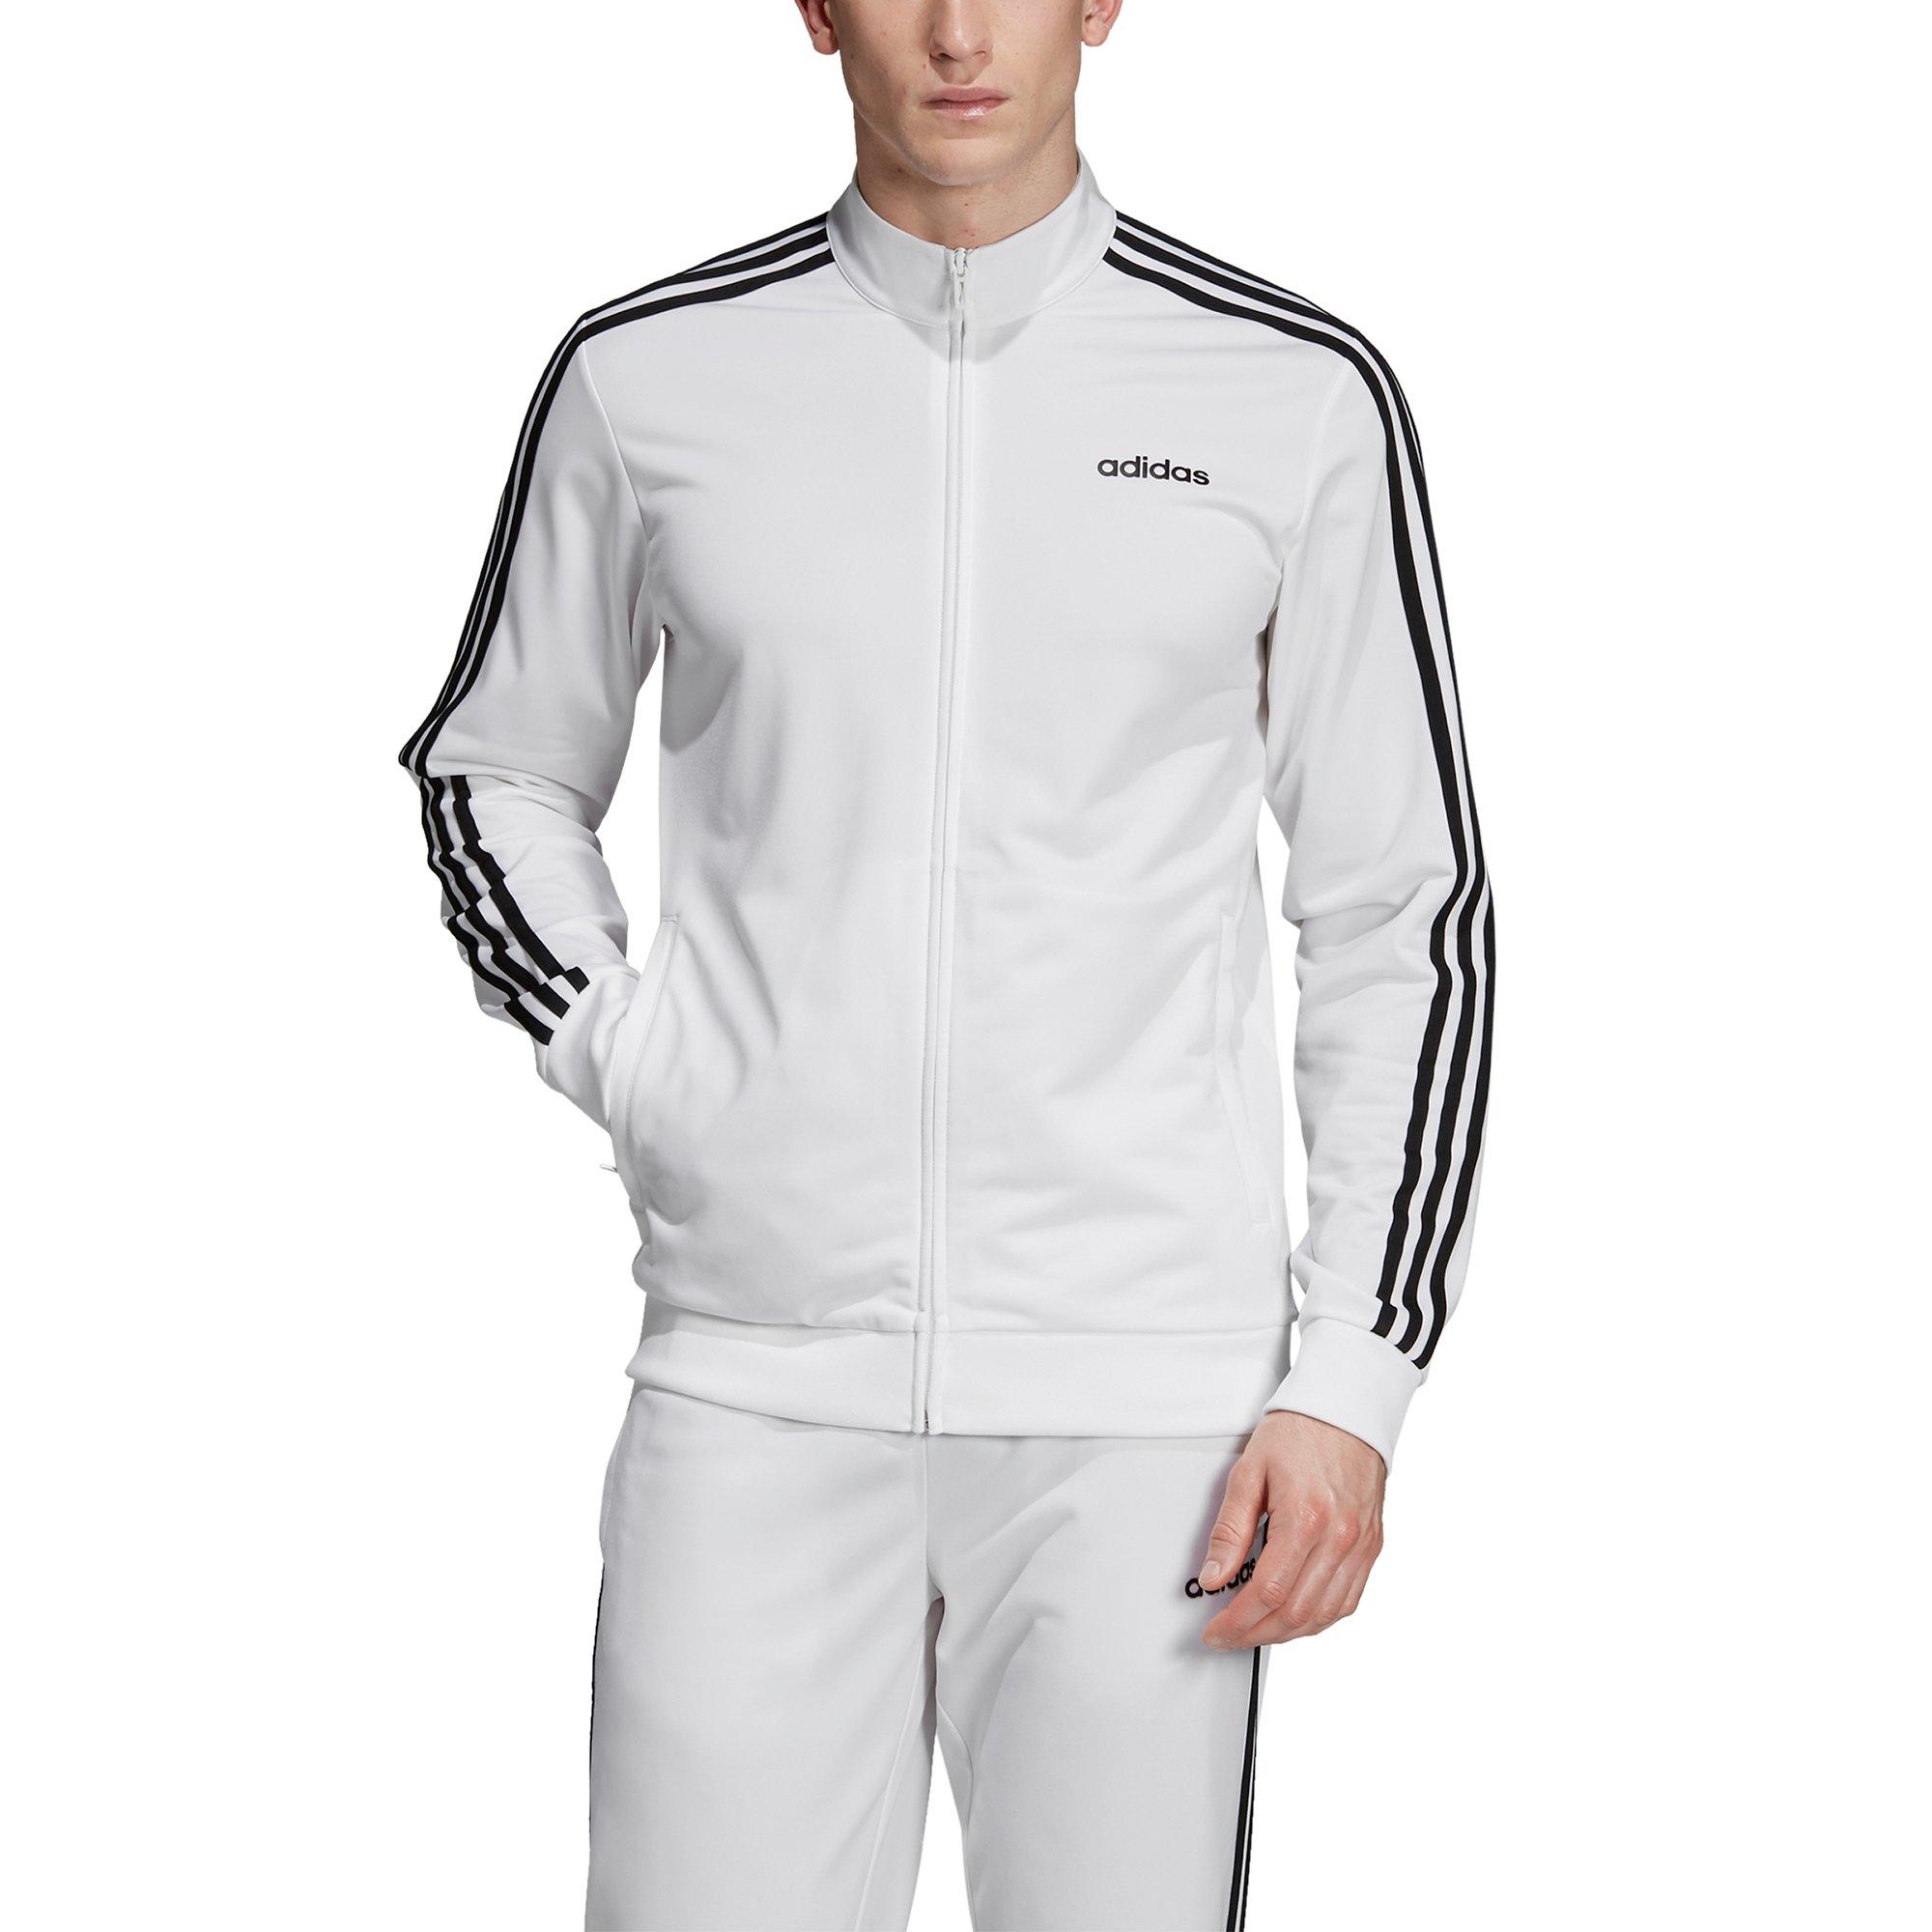 adidas tricot jacket white